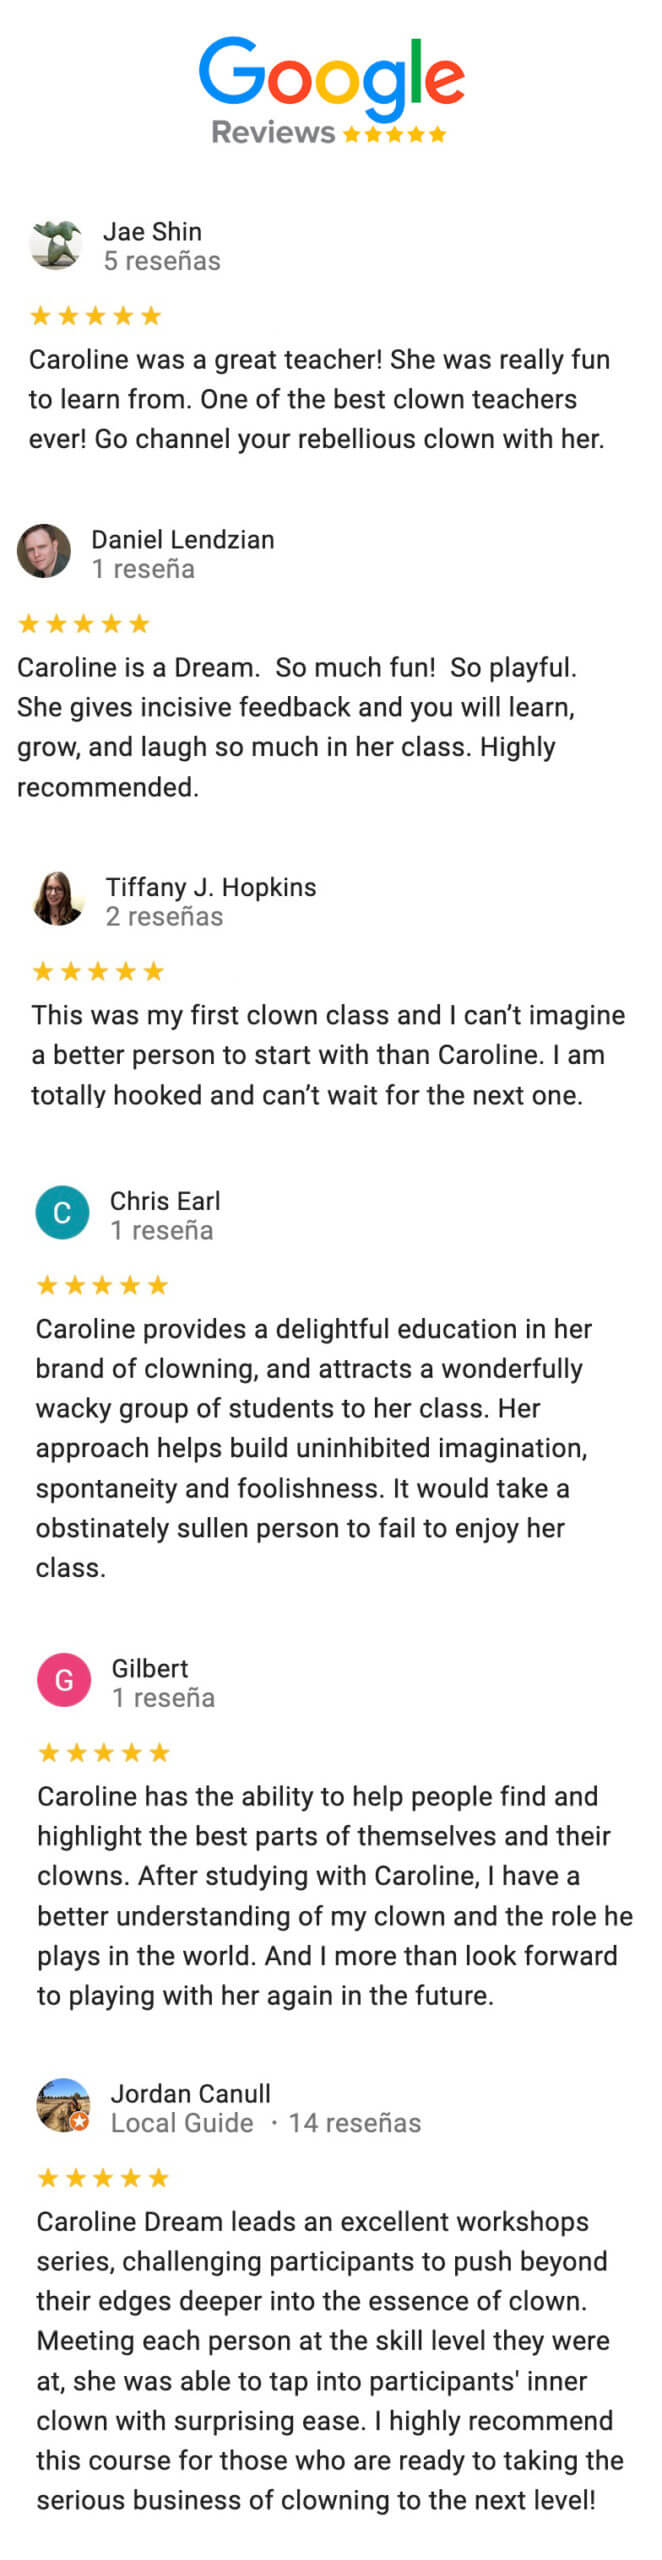 Online Clown Workshop Reviews